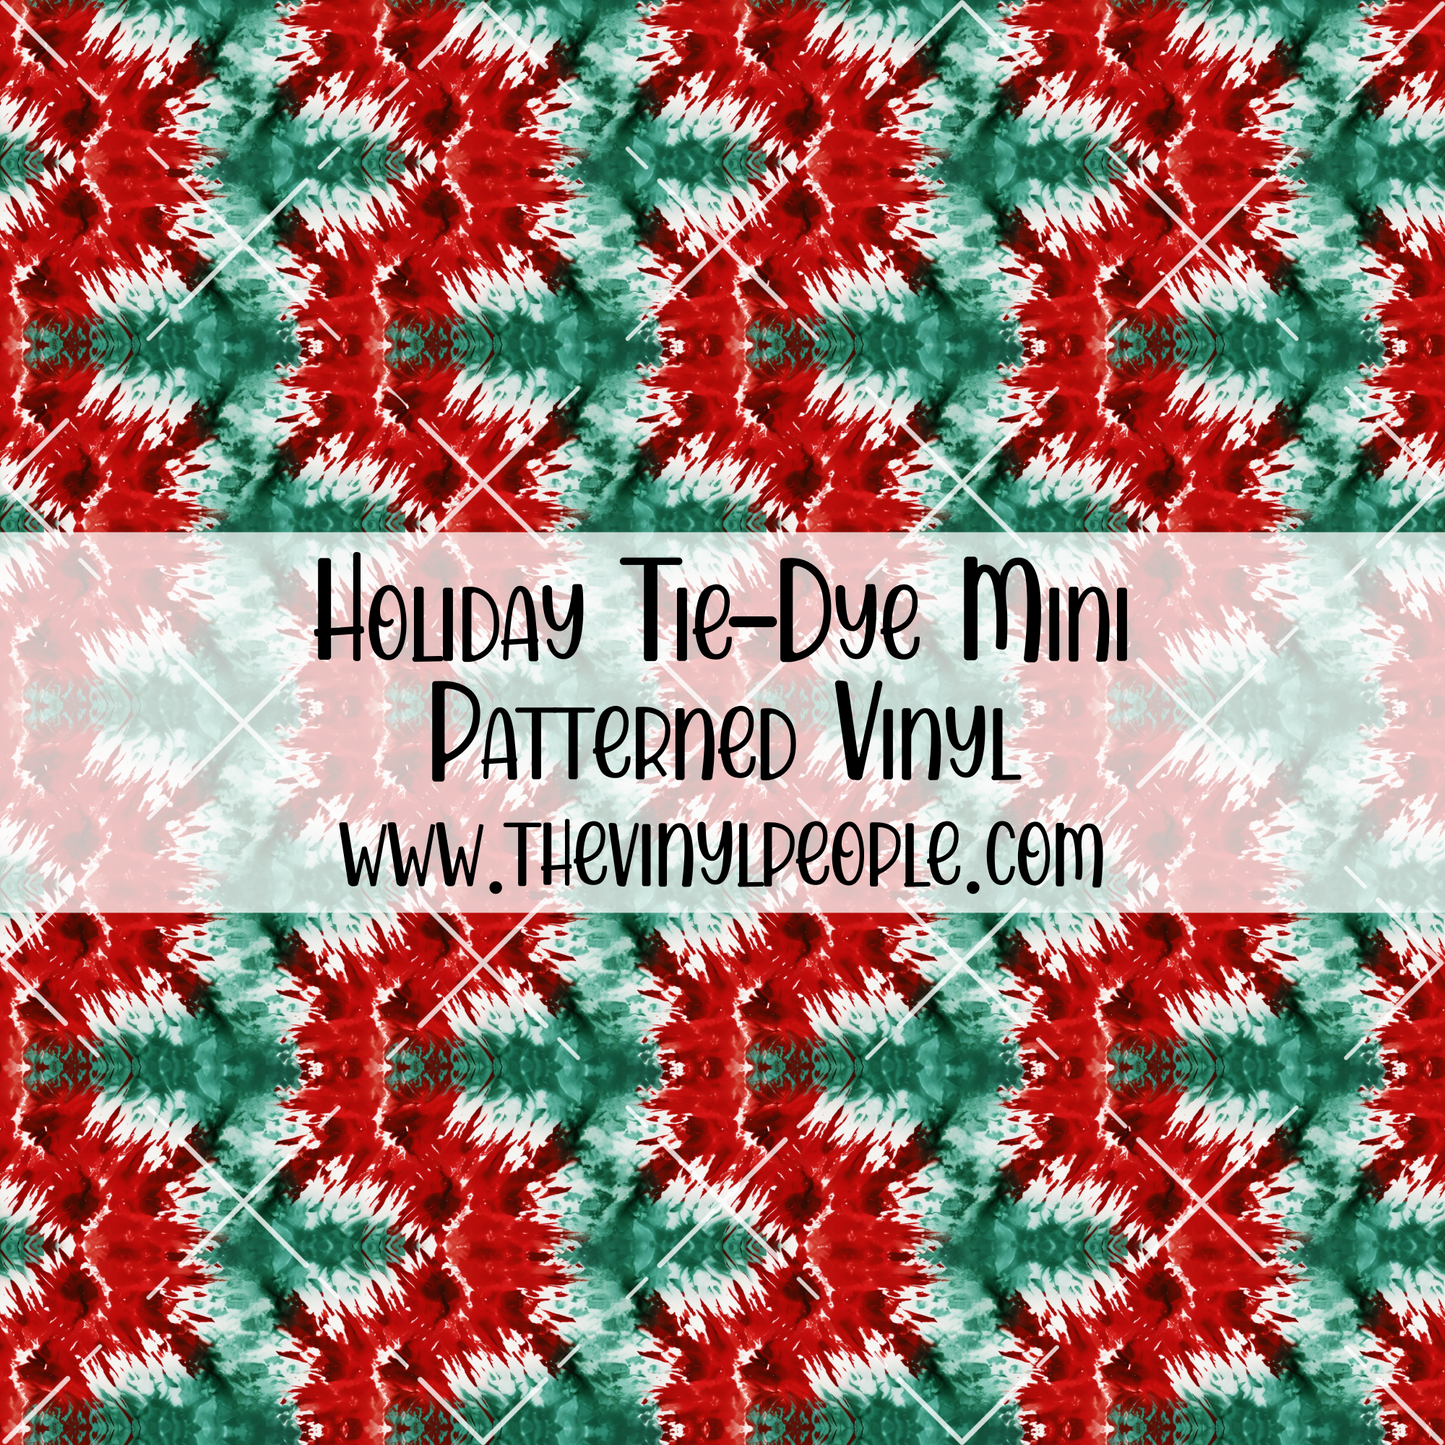 Holiday Tie-Dye Patterned Vinyl